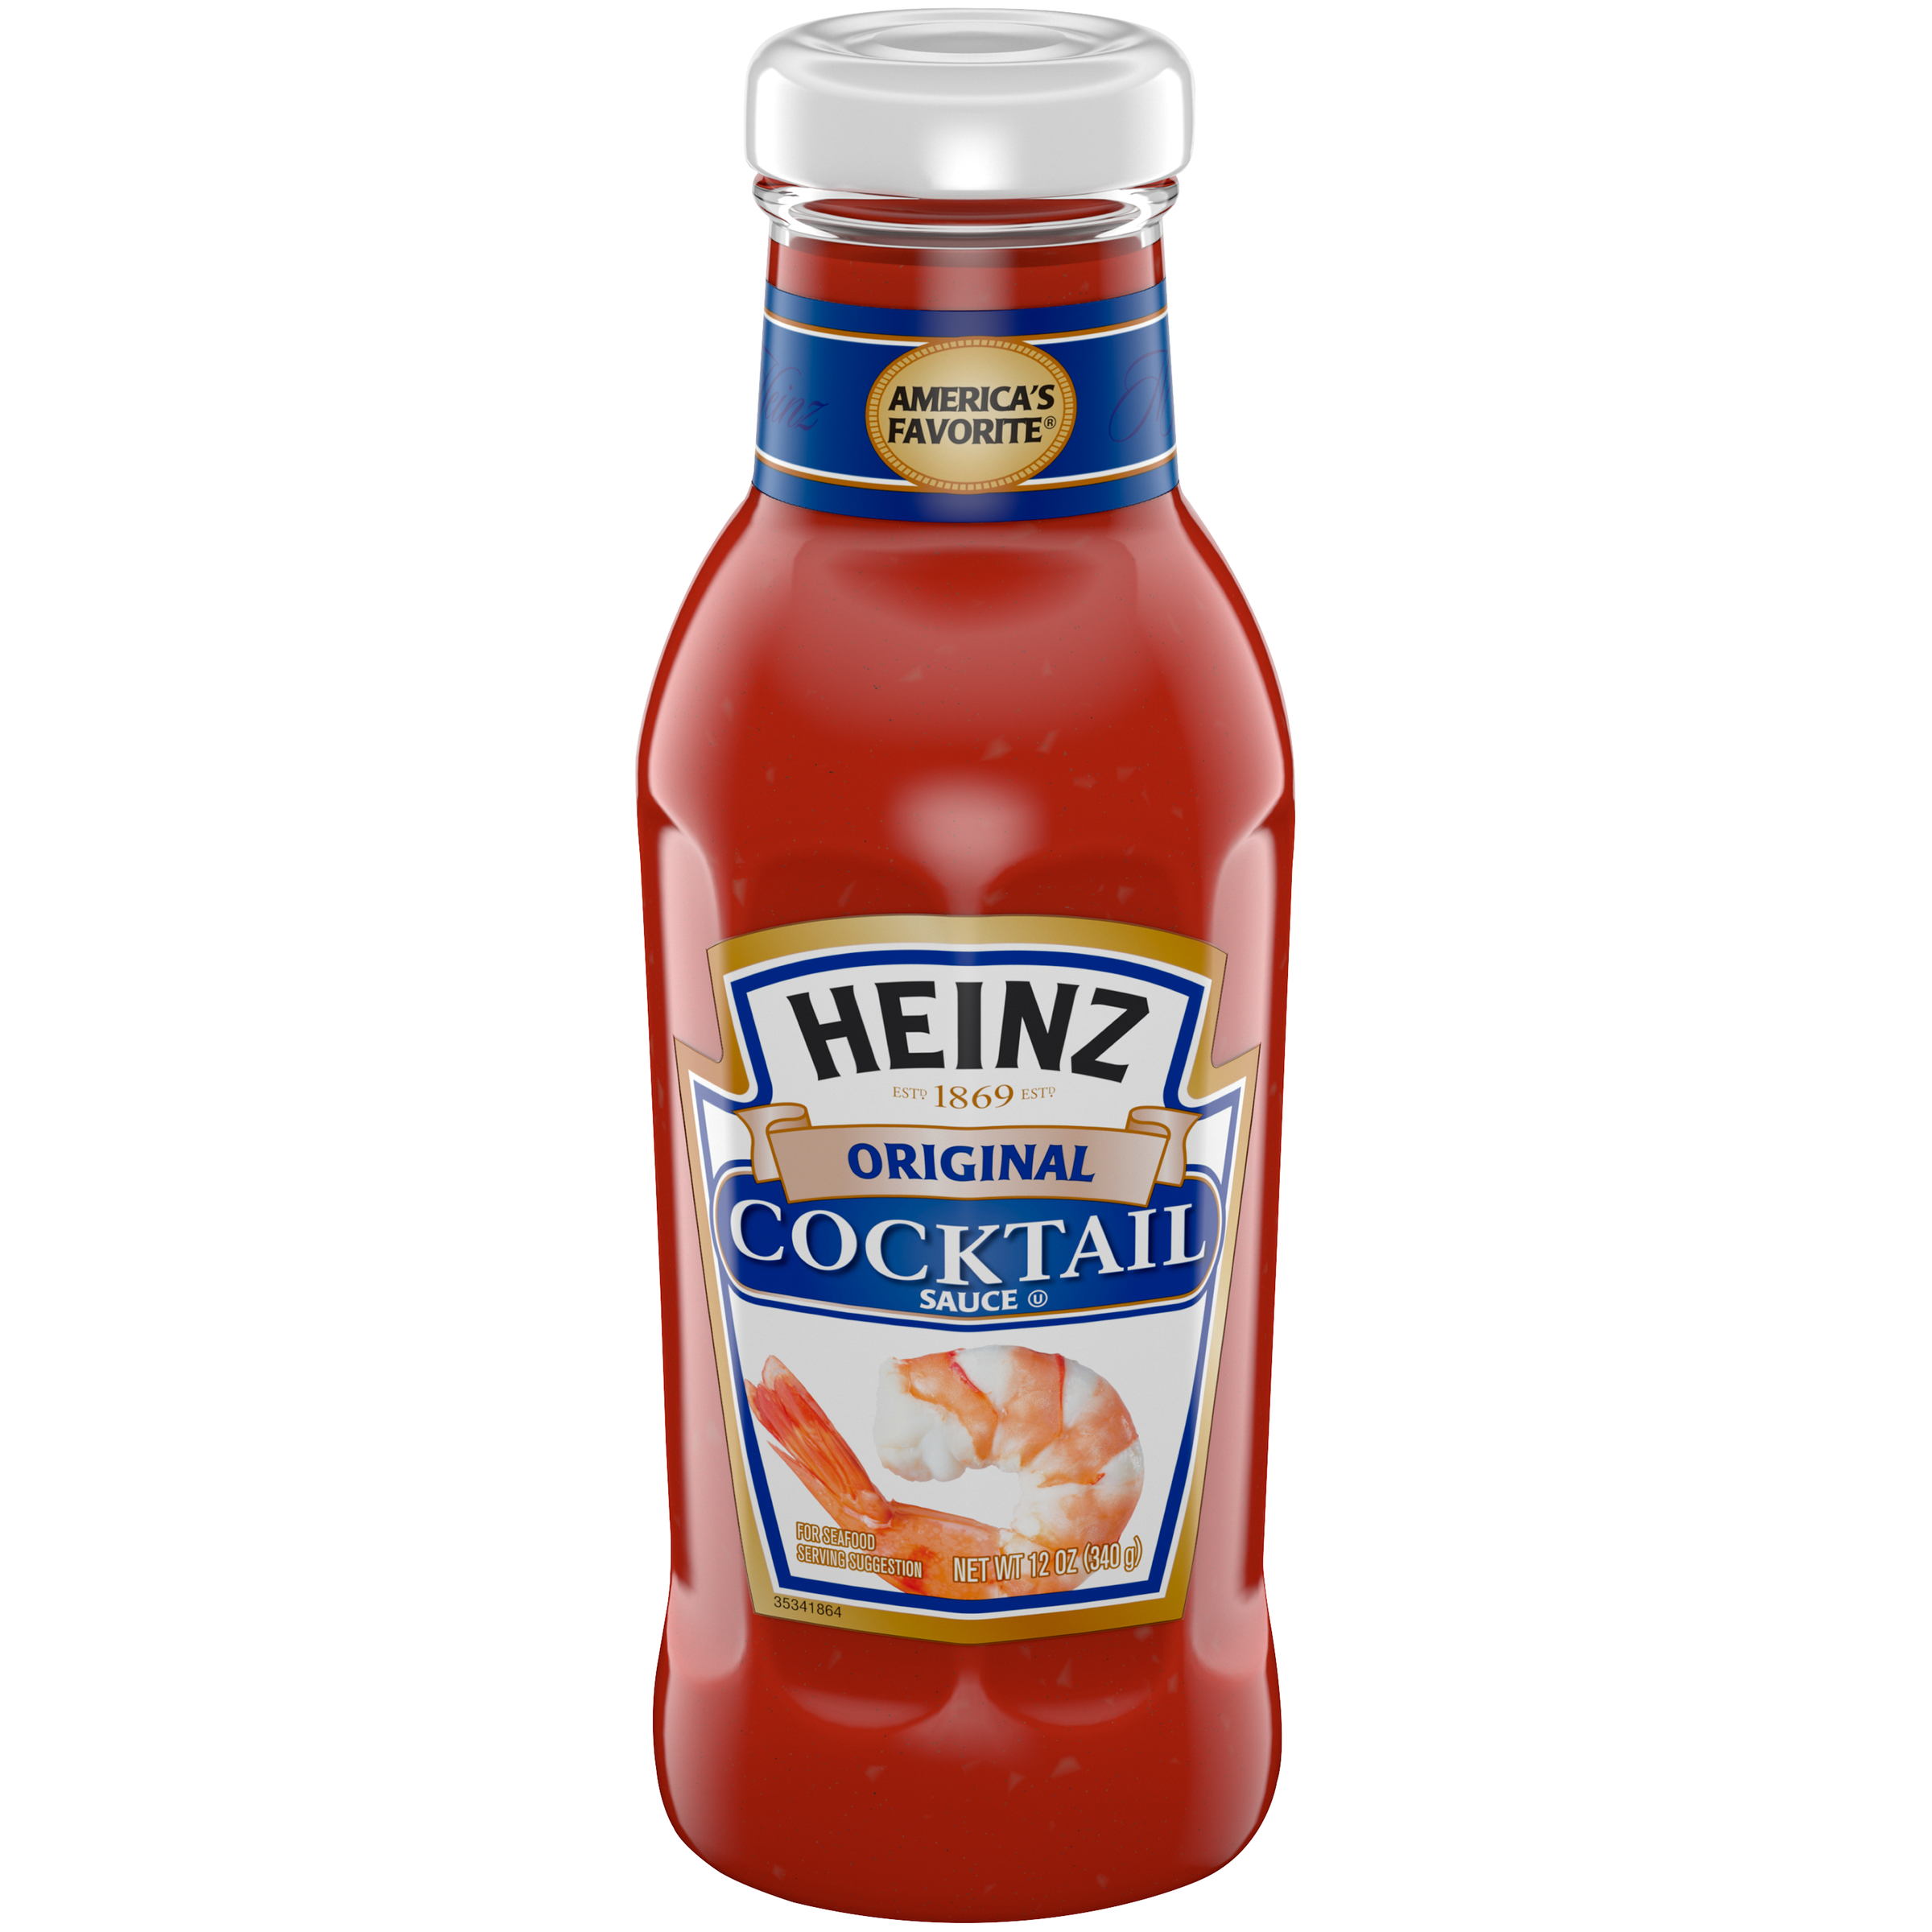 Heinz Cocktail Sauce, Original, for Seafood, 12 oz (340 g)